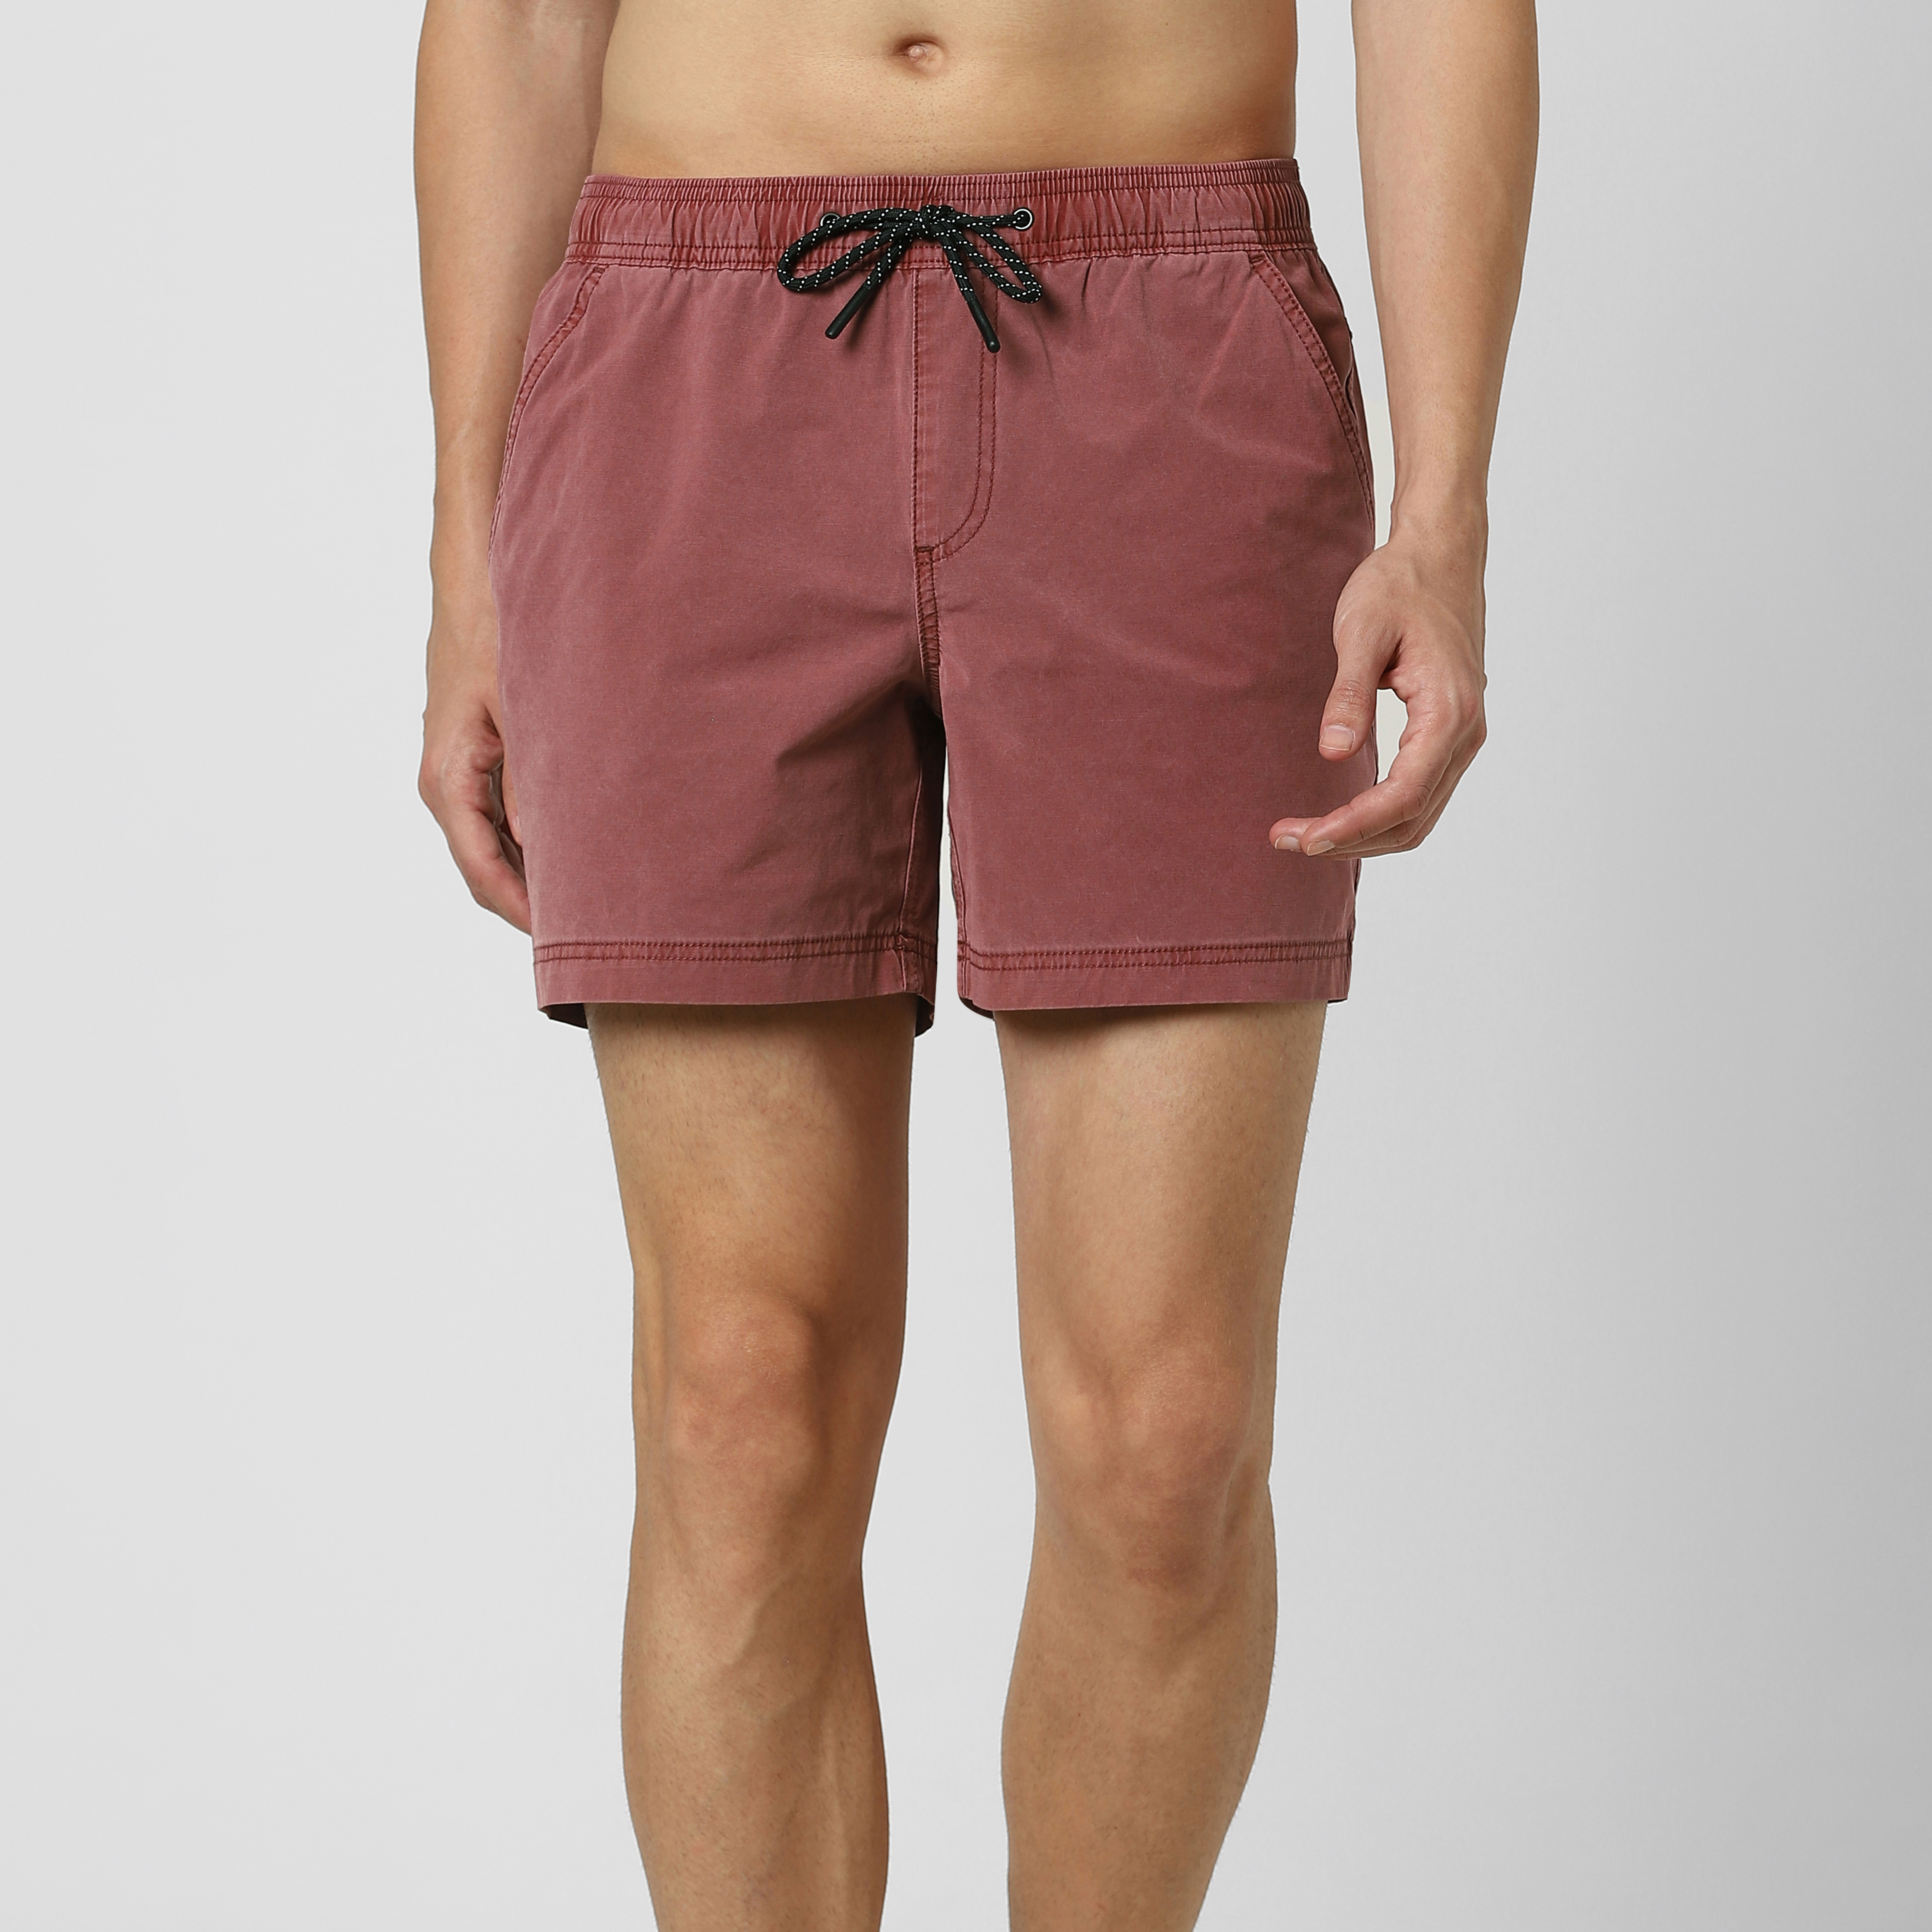 Men's Shorts  Bearbottom – Bearbottom Clothing